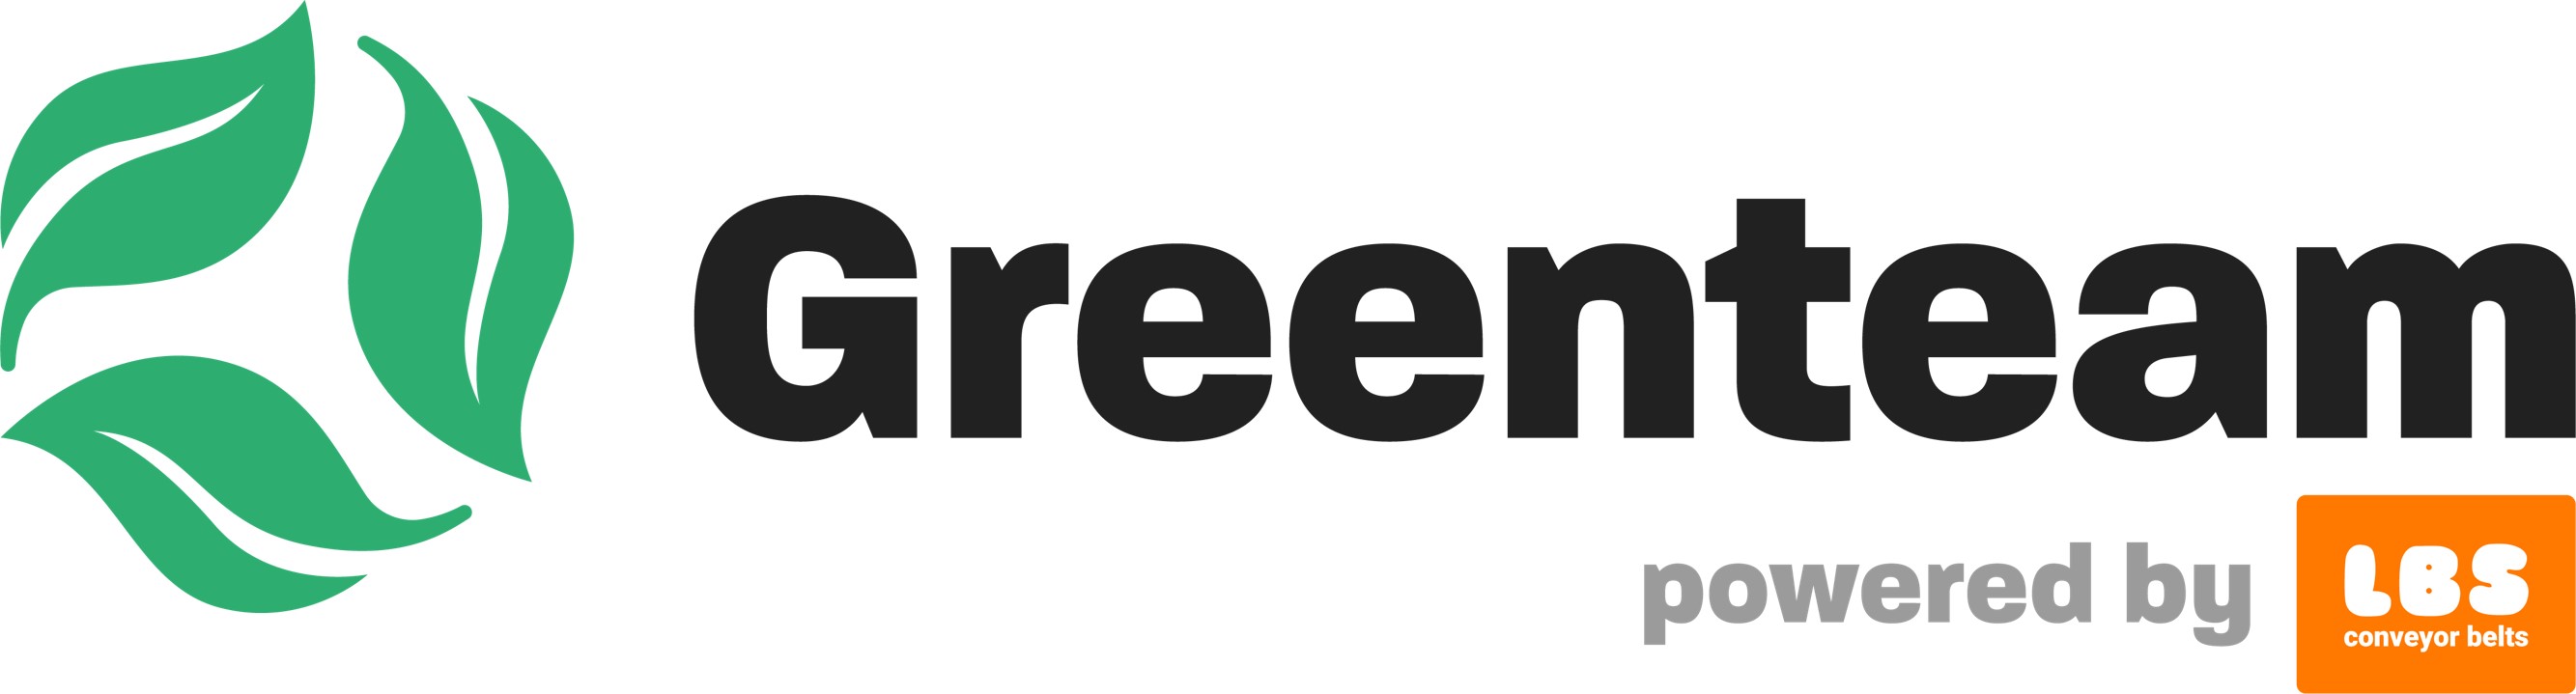 Greenteam logo